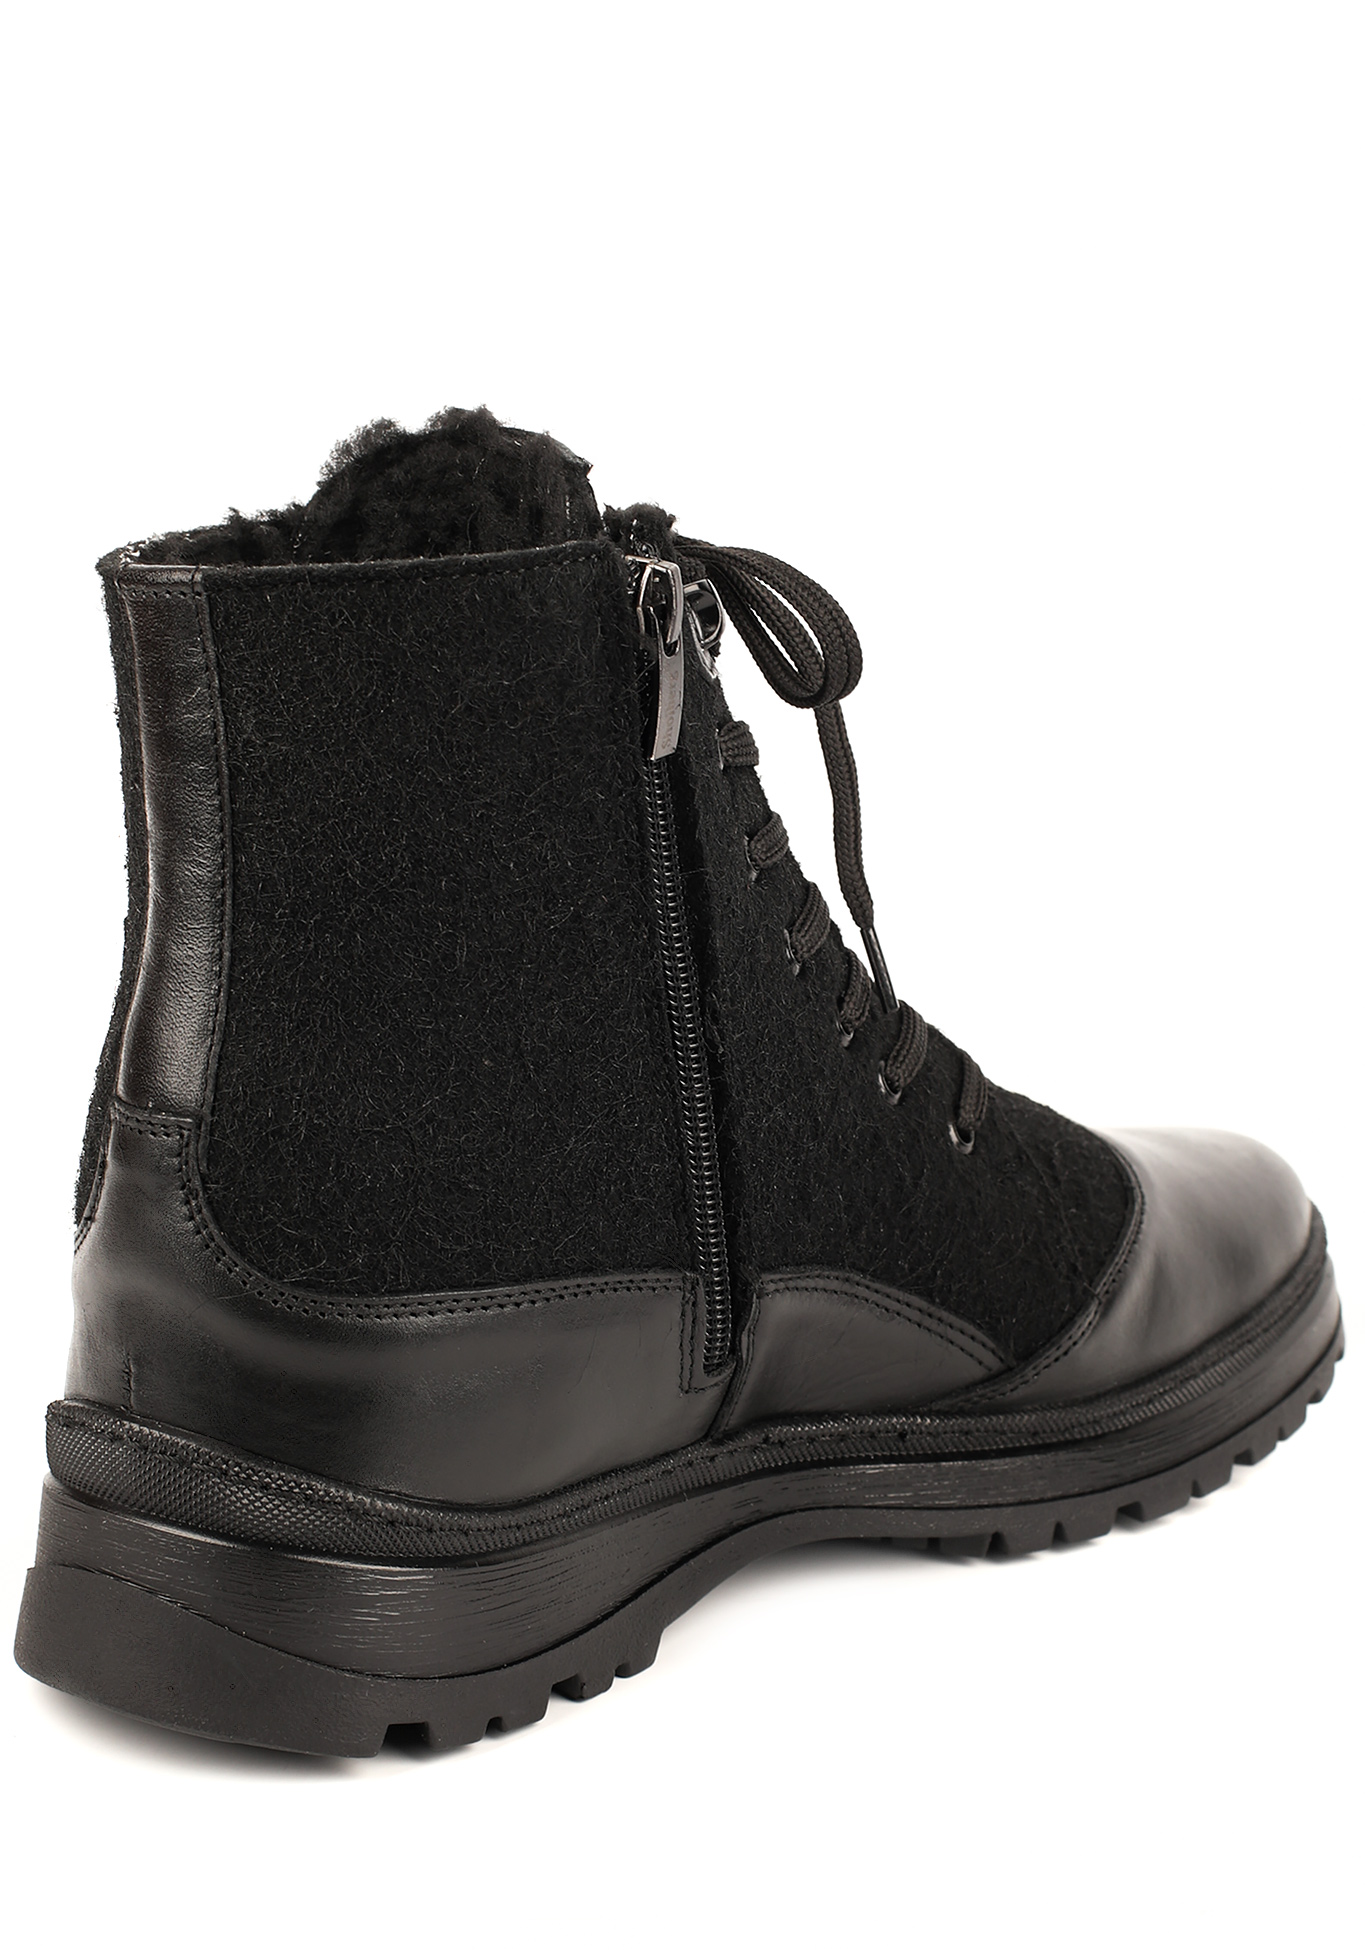 Ботинки мужские "Кален" Shoiberg, размер 42, цвет черный - фото 7